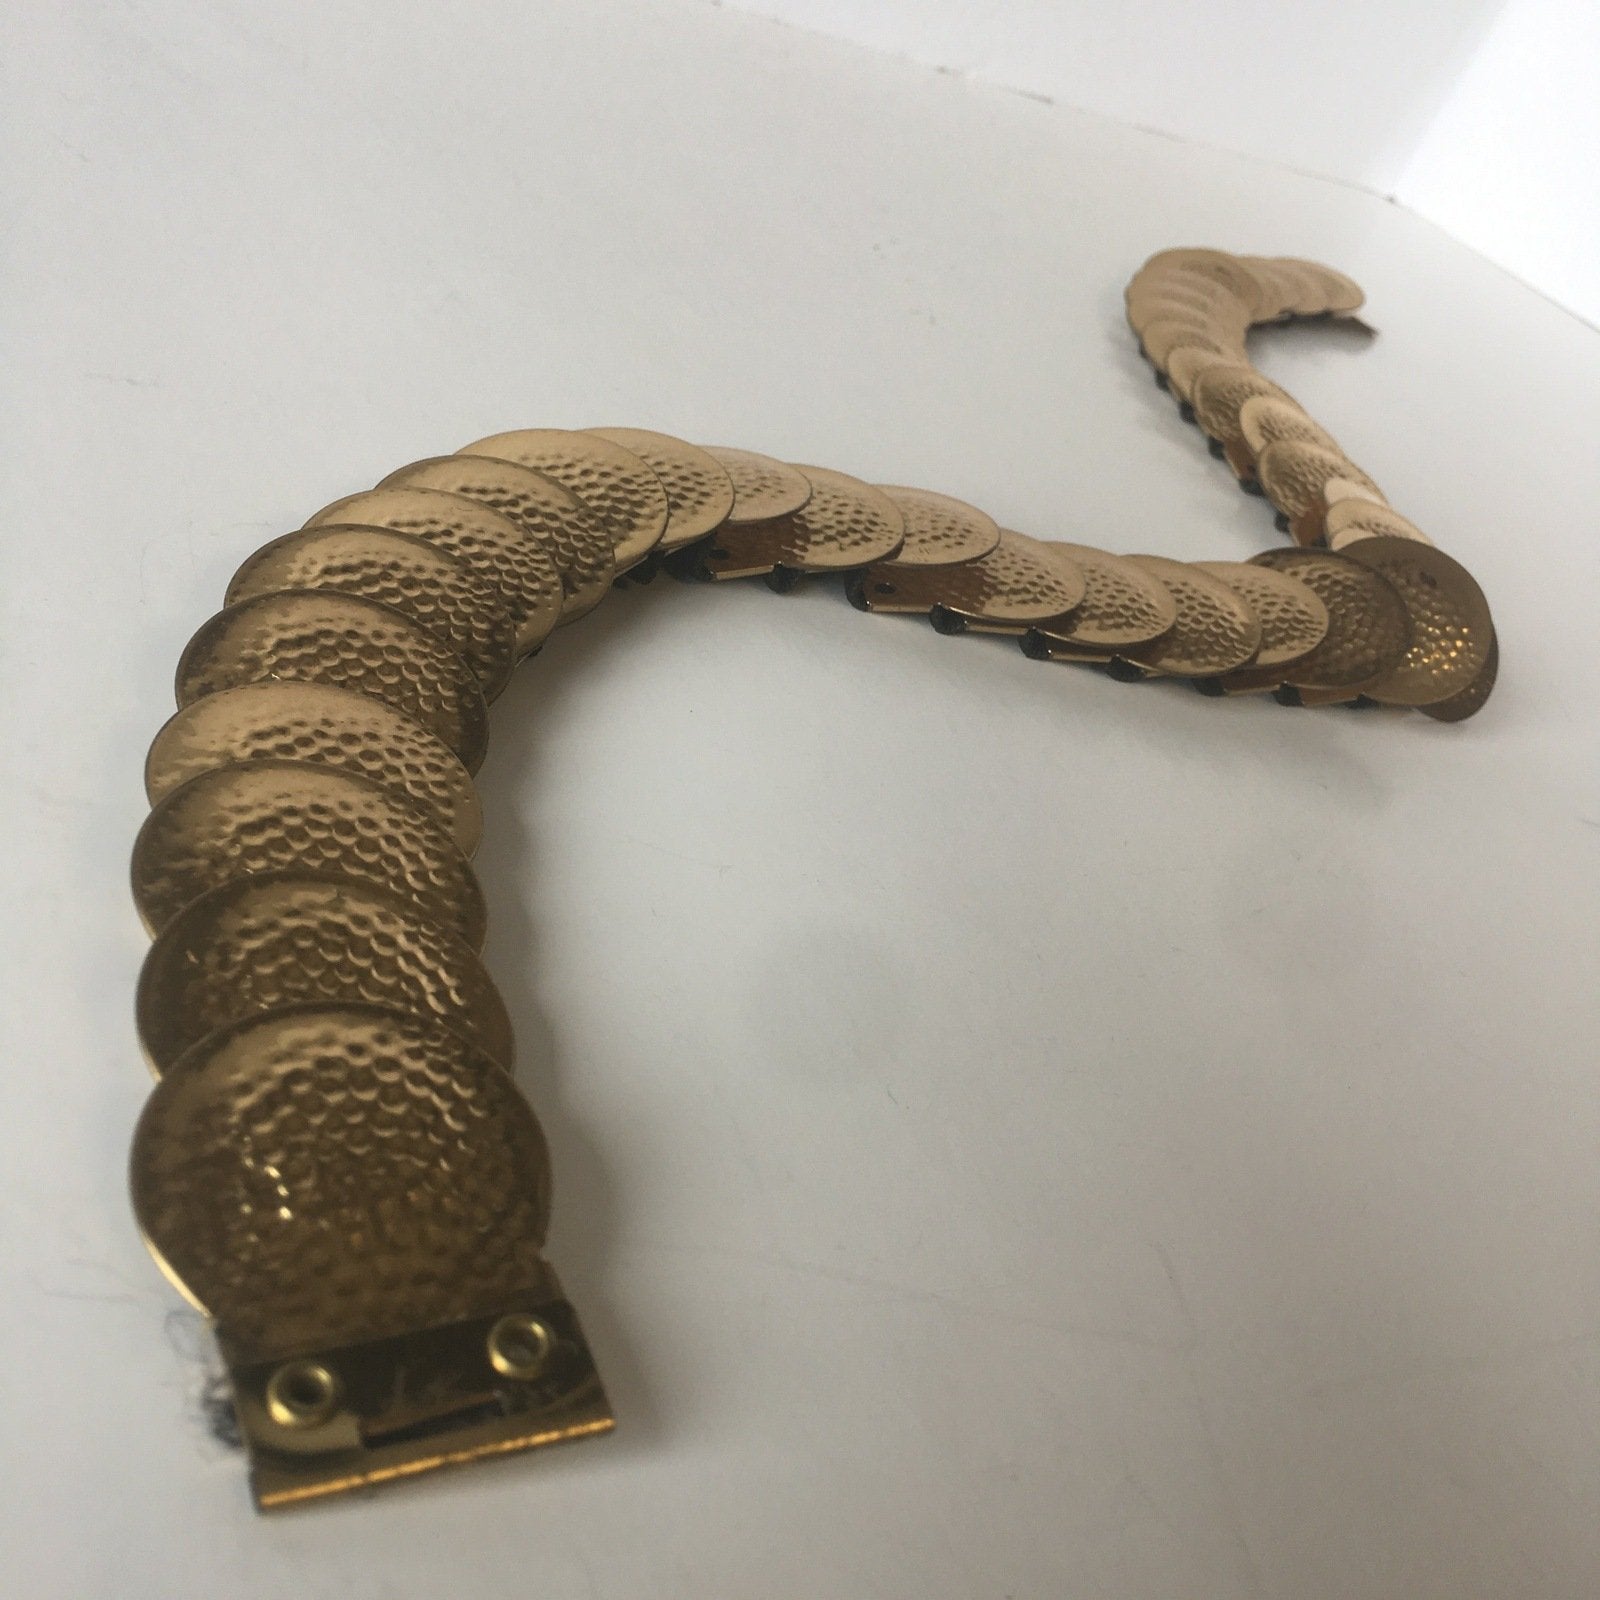 Hammered Circles Belt Scale Snake Design Vintage Accessories